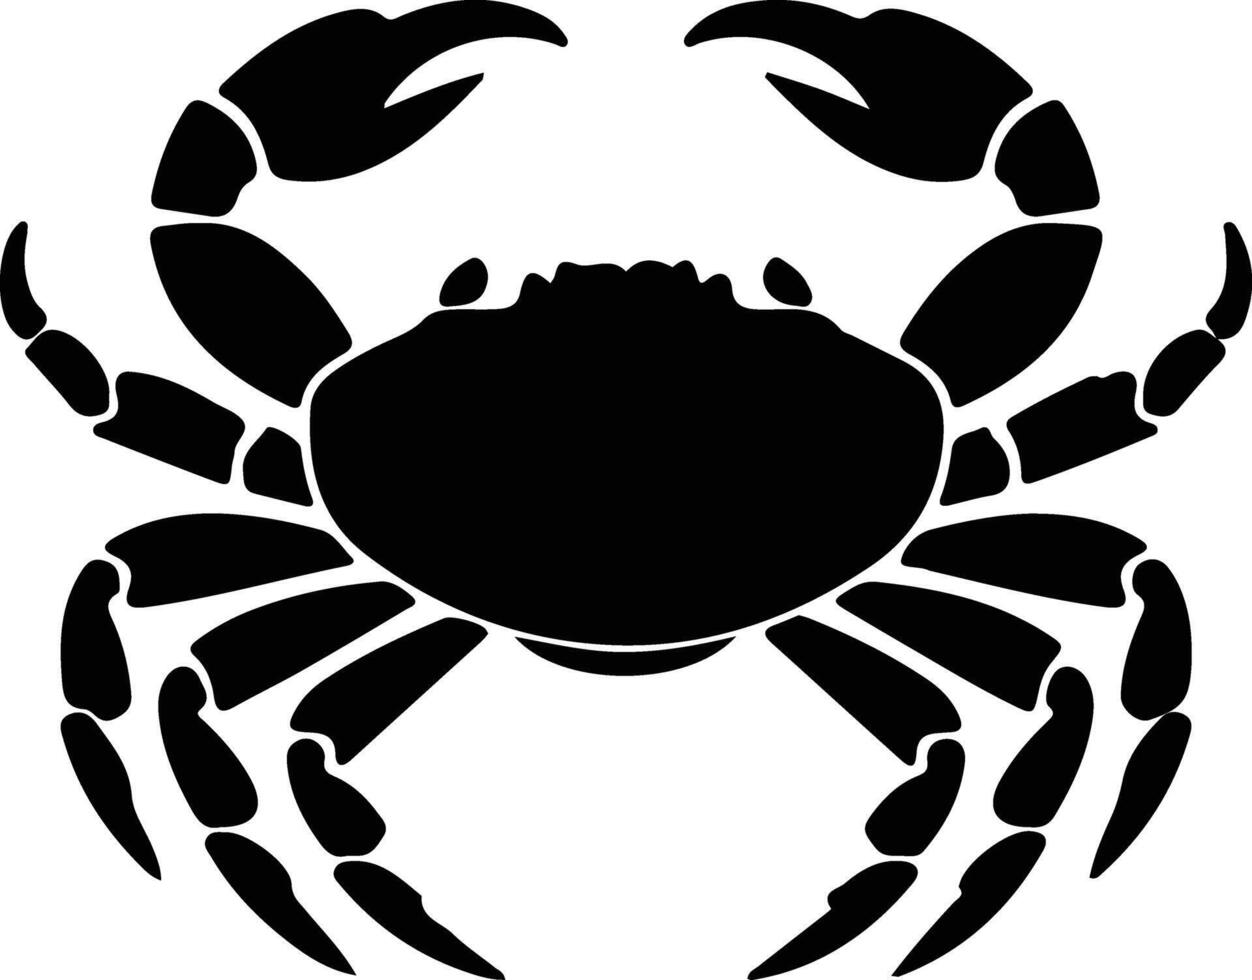 crab black silhouette vector